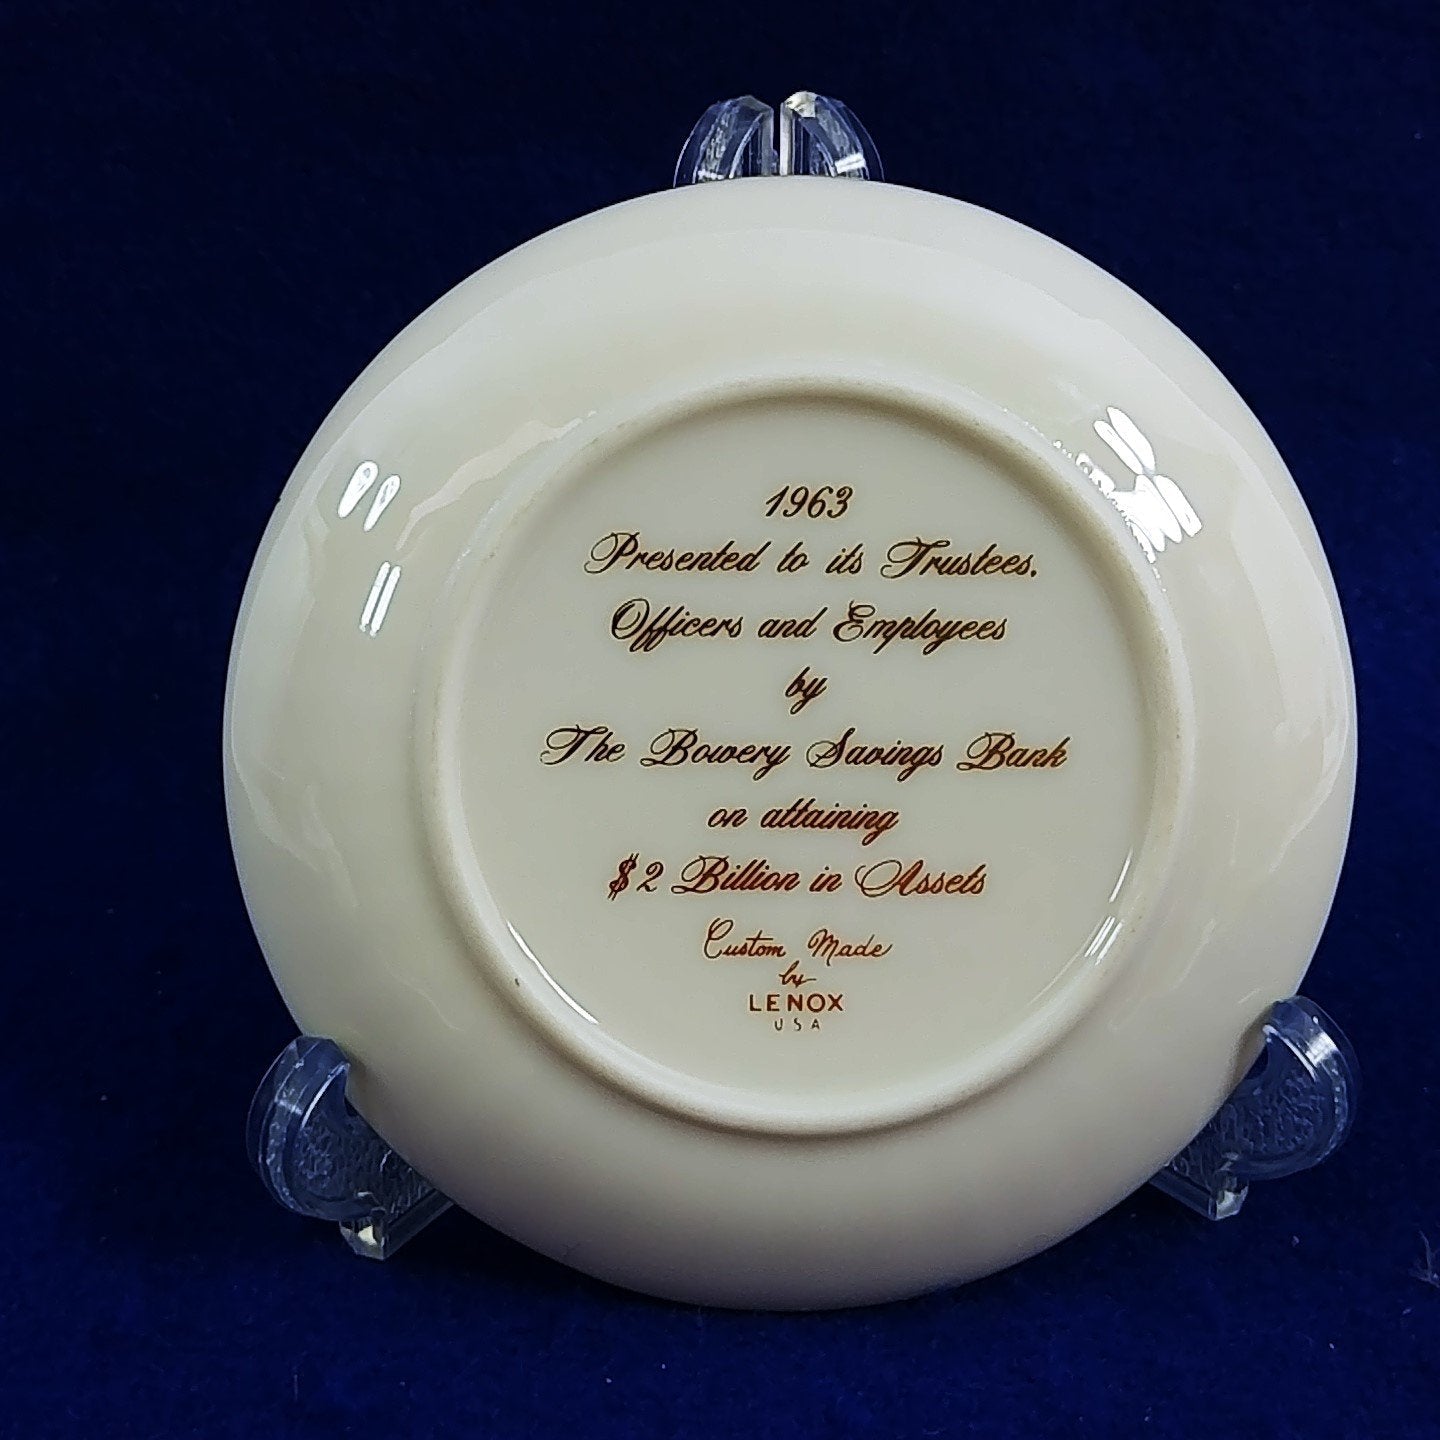 Commemorative Plate Bowery Savings Bank 1963 Custom Made by Lenox 4.25"